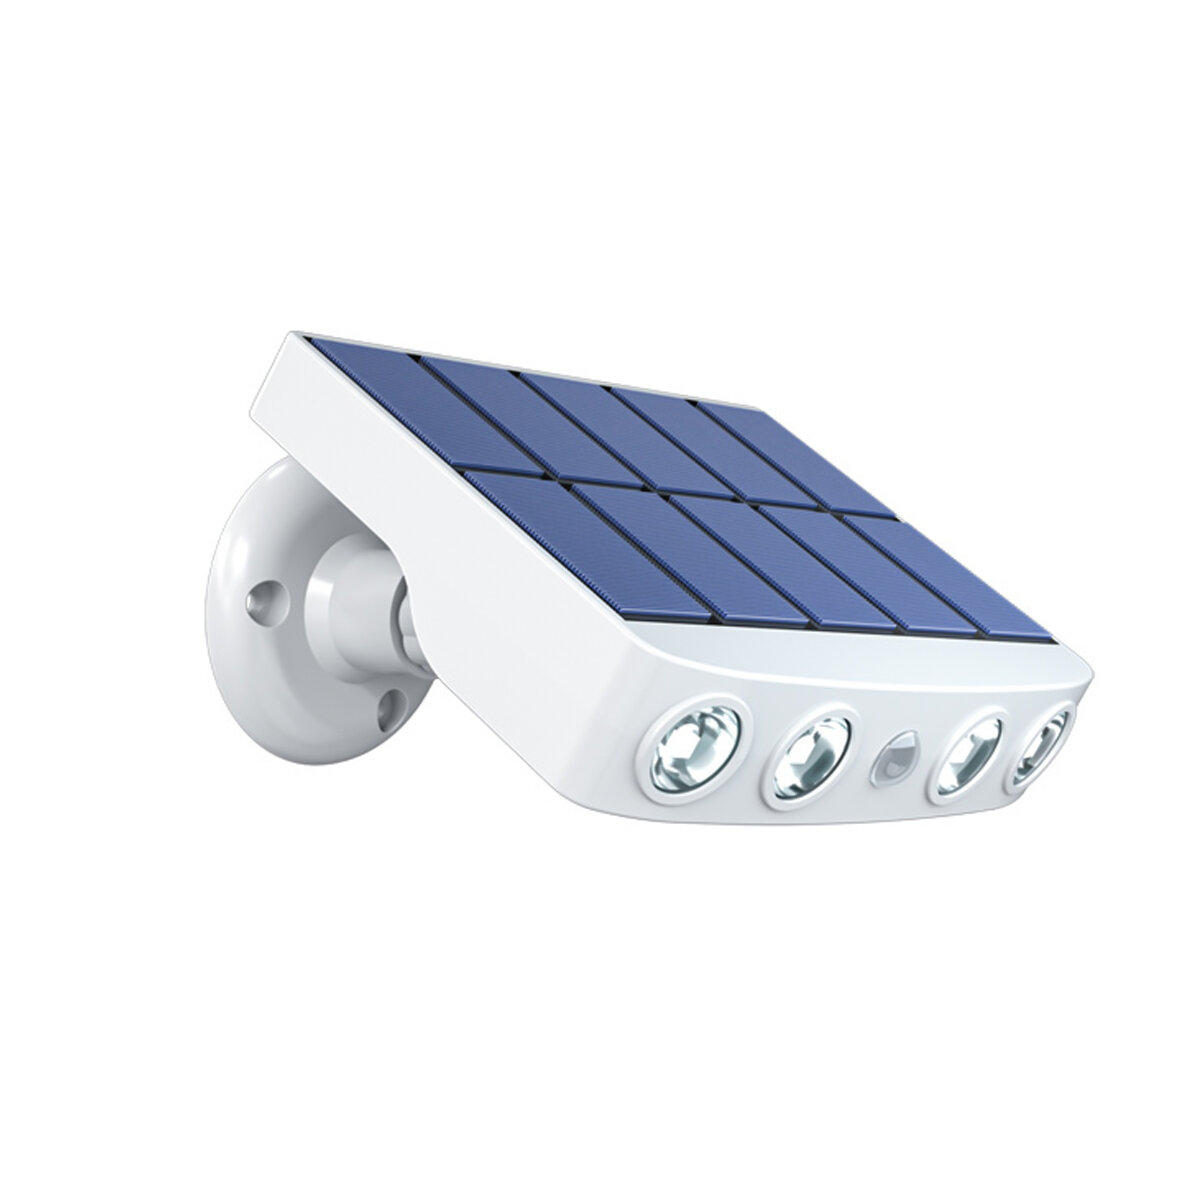 LED Solar Powered Wall Light IP65 Waterproof Outdoor Garden Light PIR Human Body Motion Sensor with 